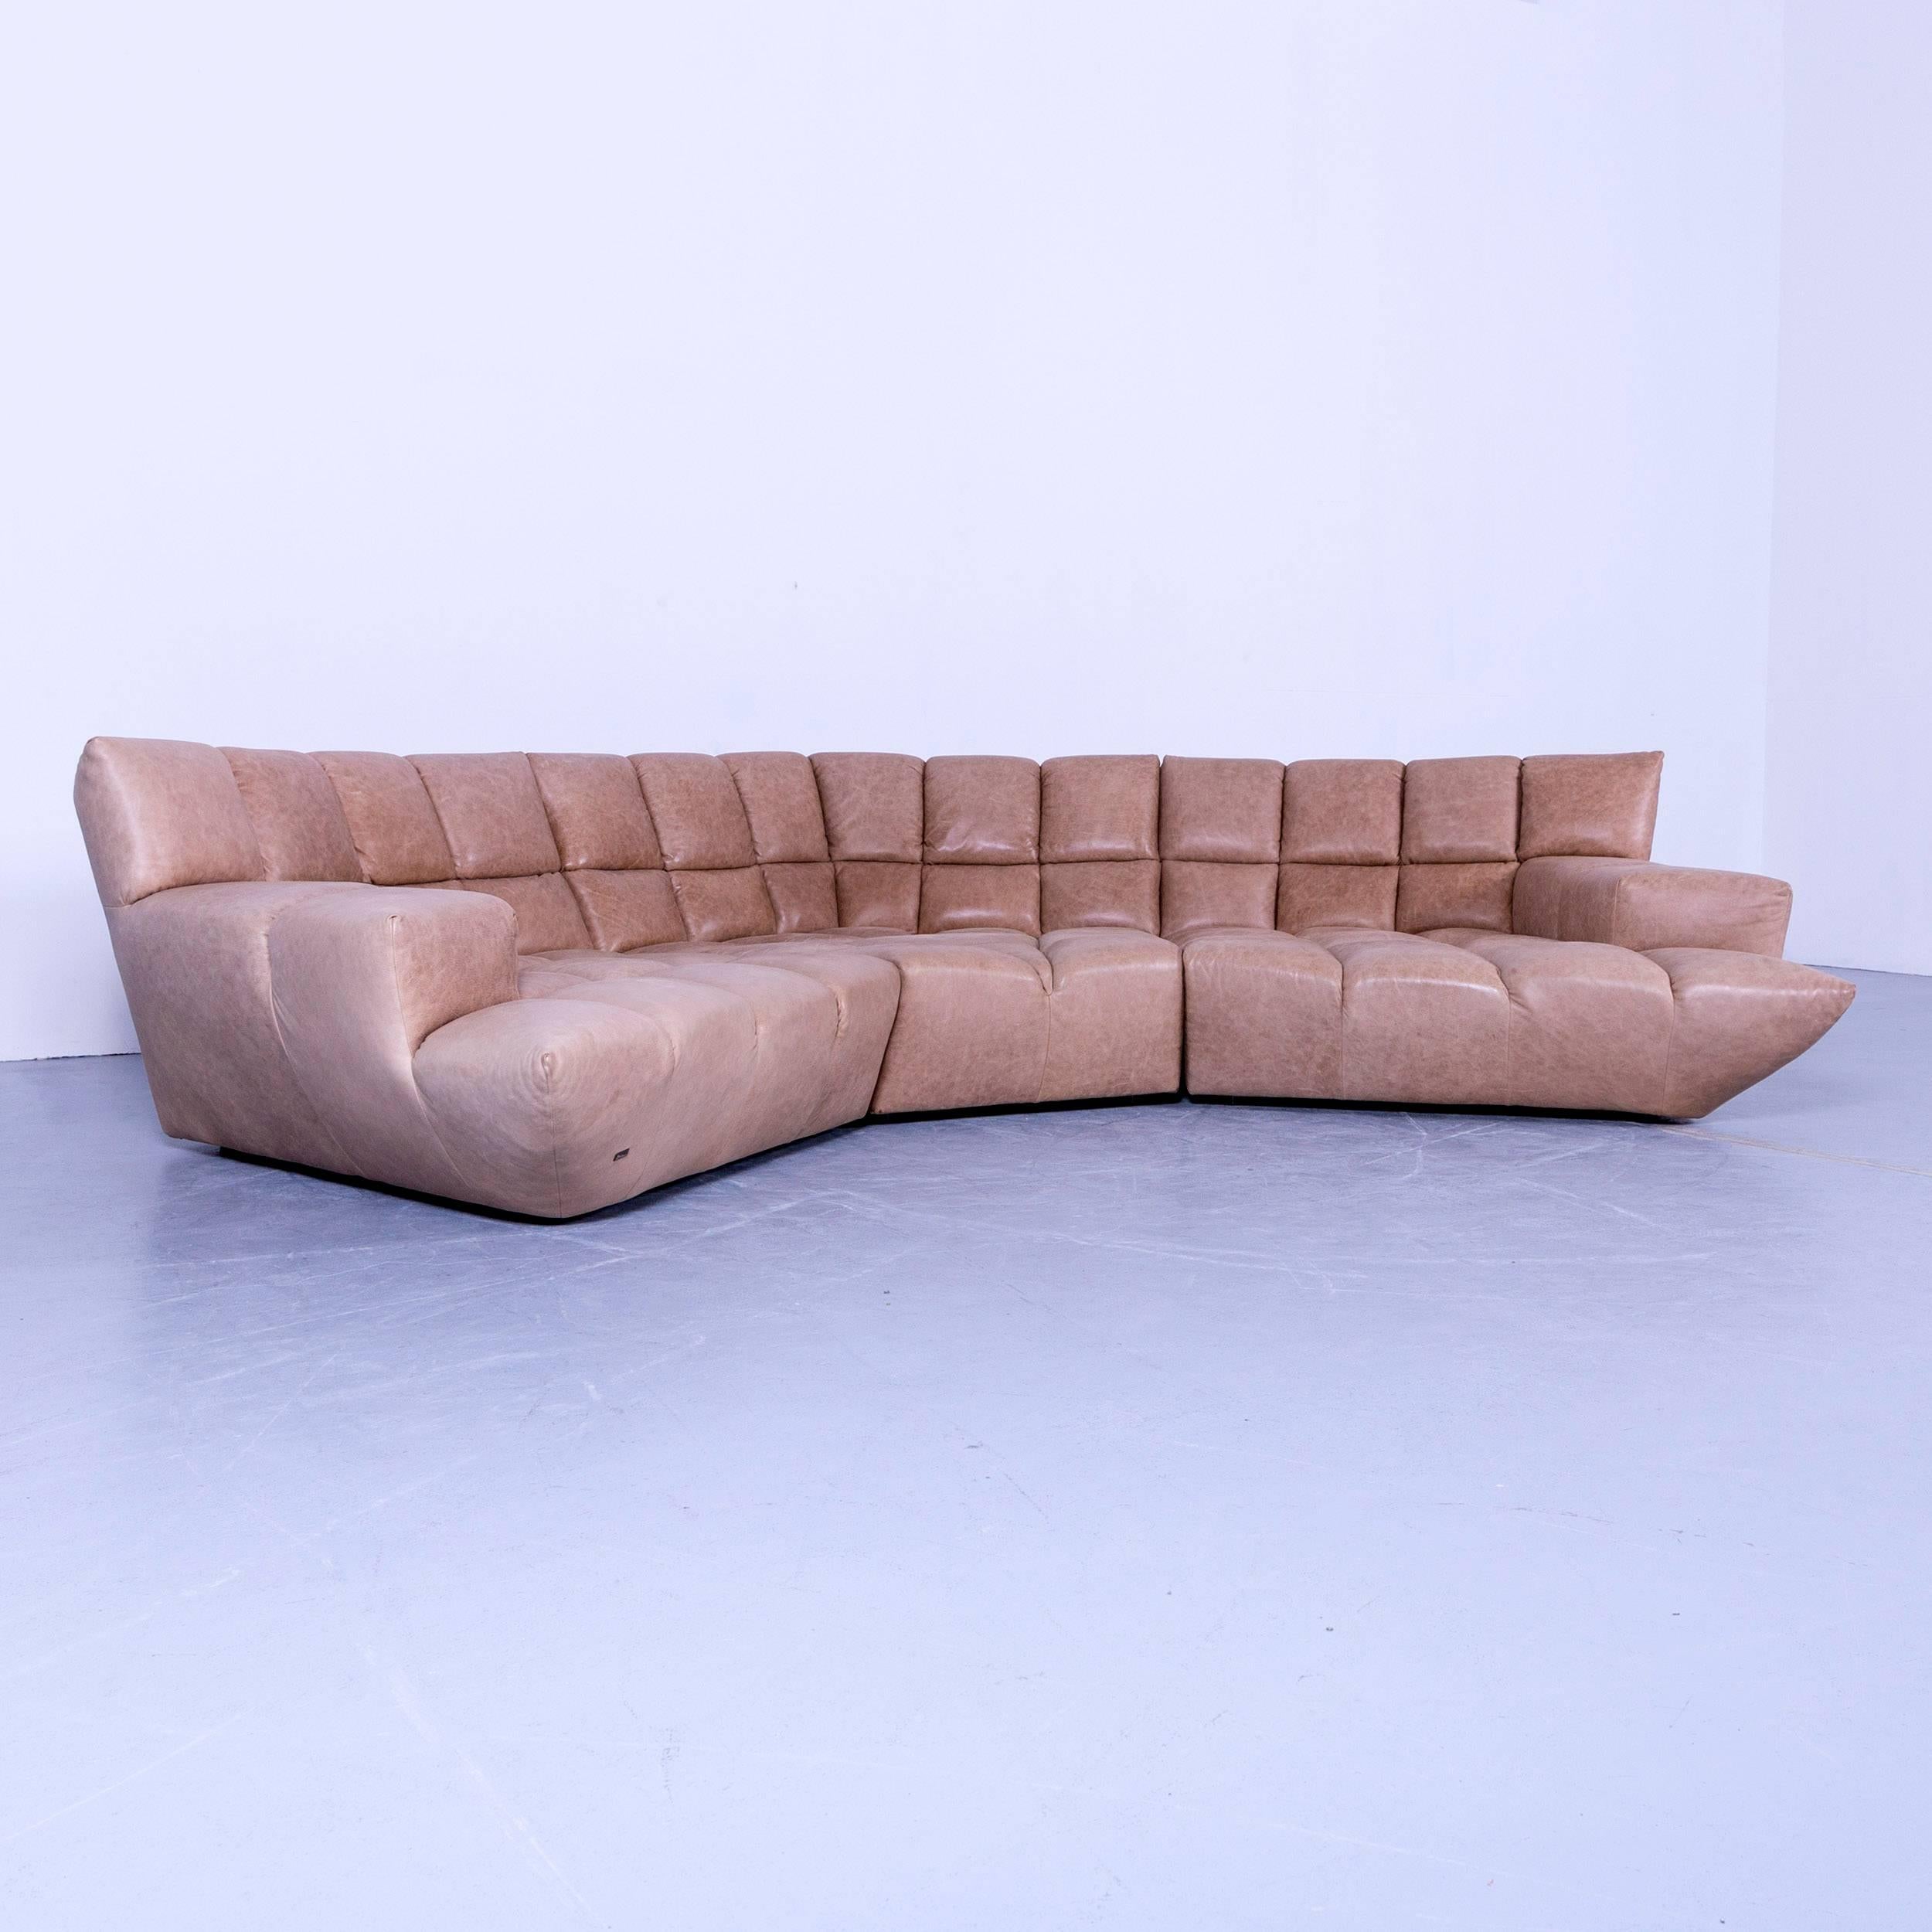 An Bretz Cloud 7 Anilin leather designer corner-sofa brown.

















   